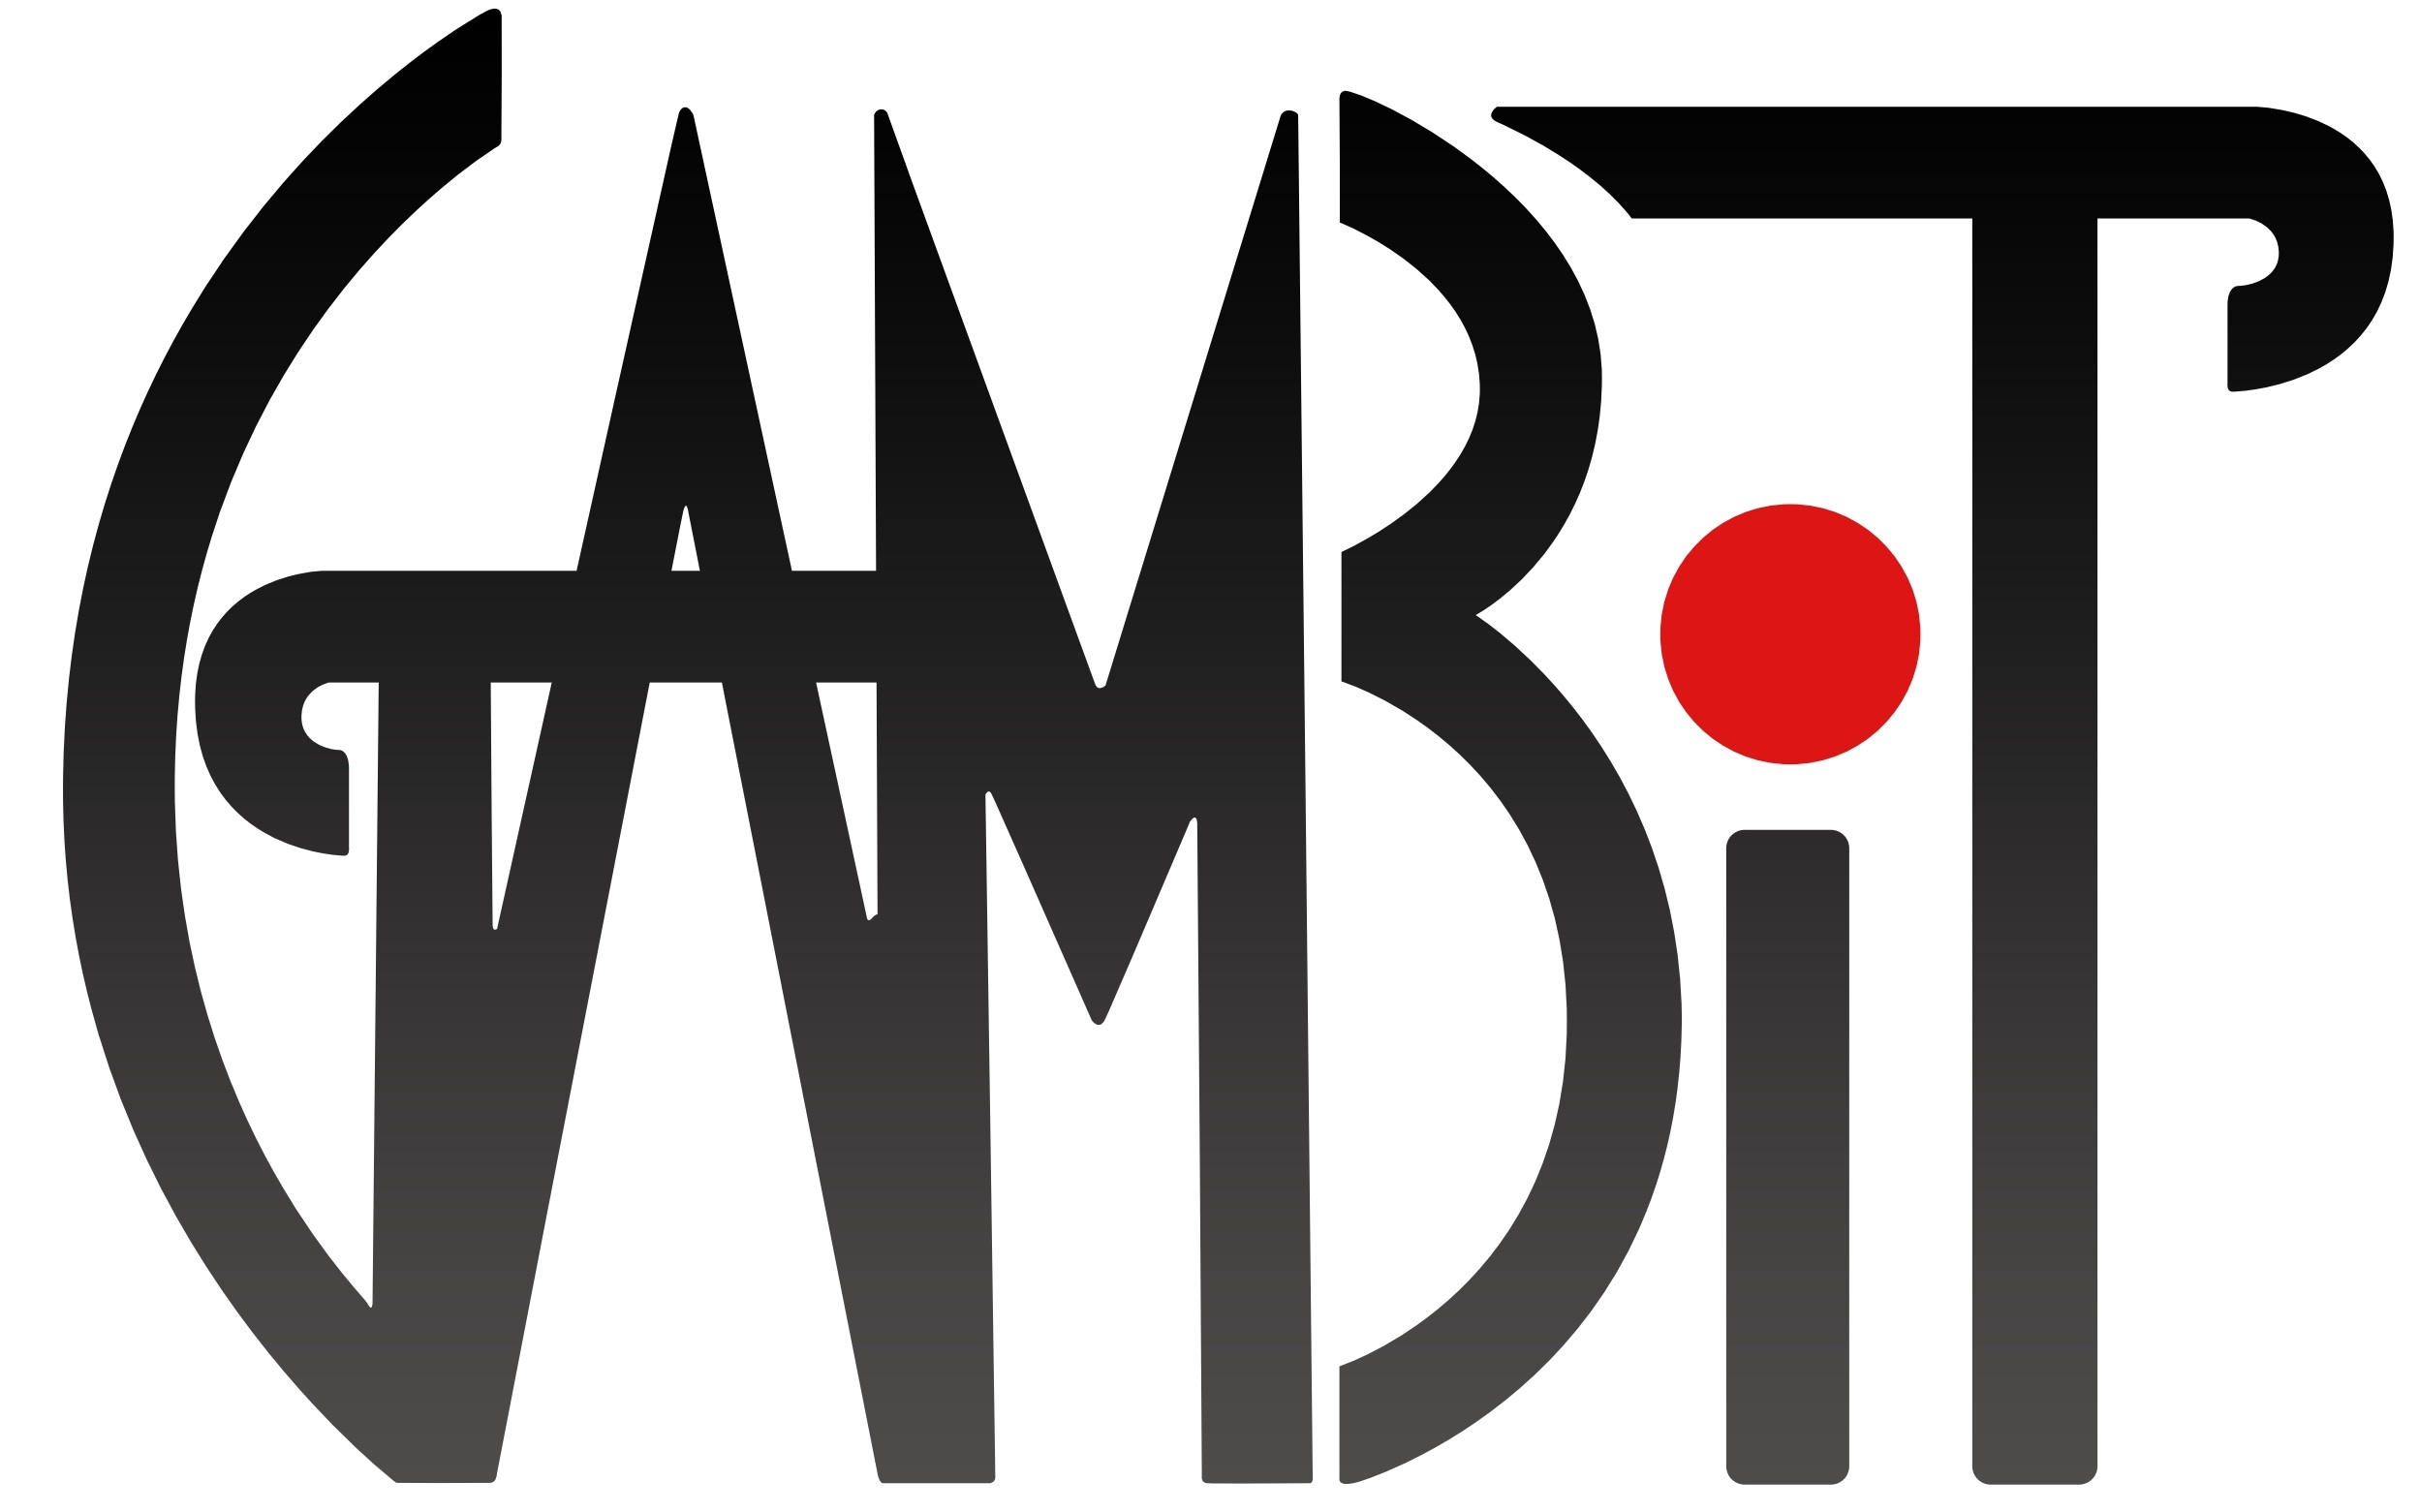 GAMBIT Logo.jpg 242bad111ef7b90b8f22de6d65bd32aa